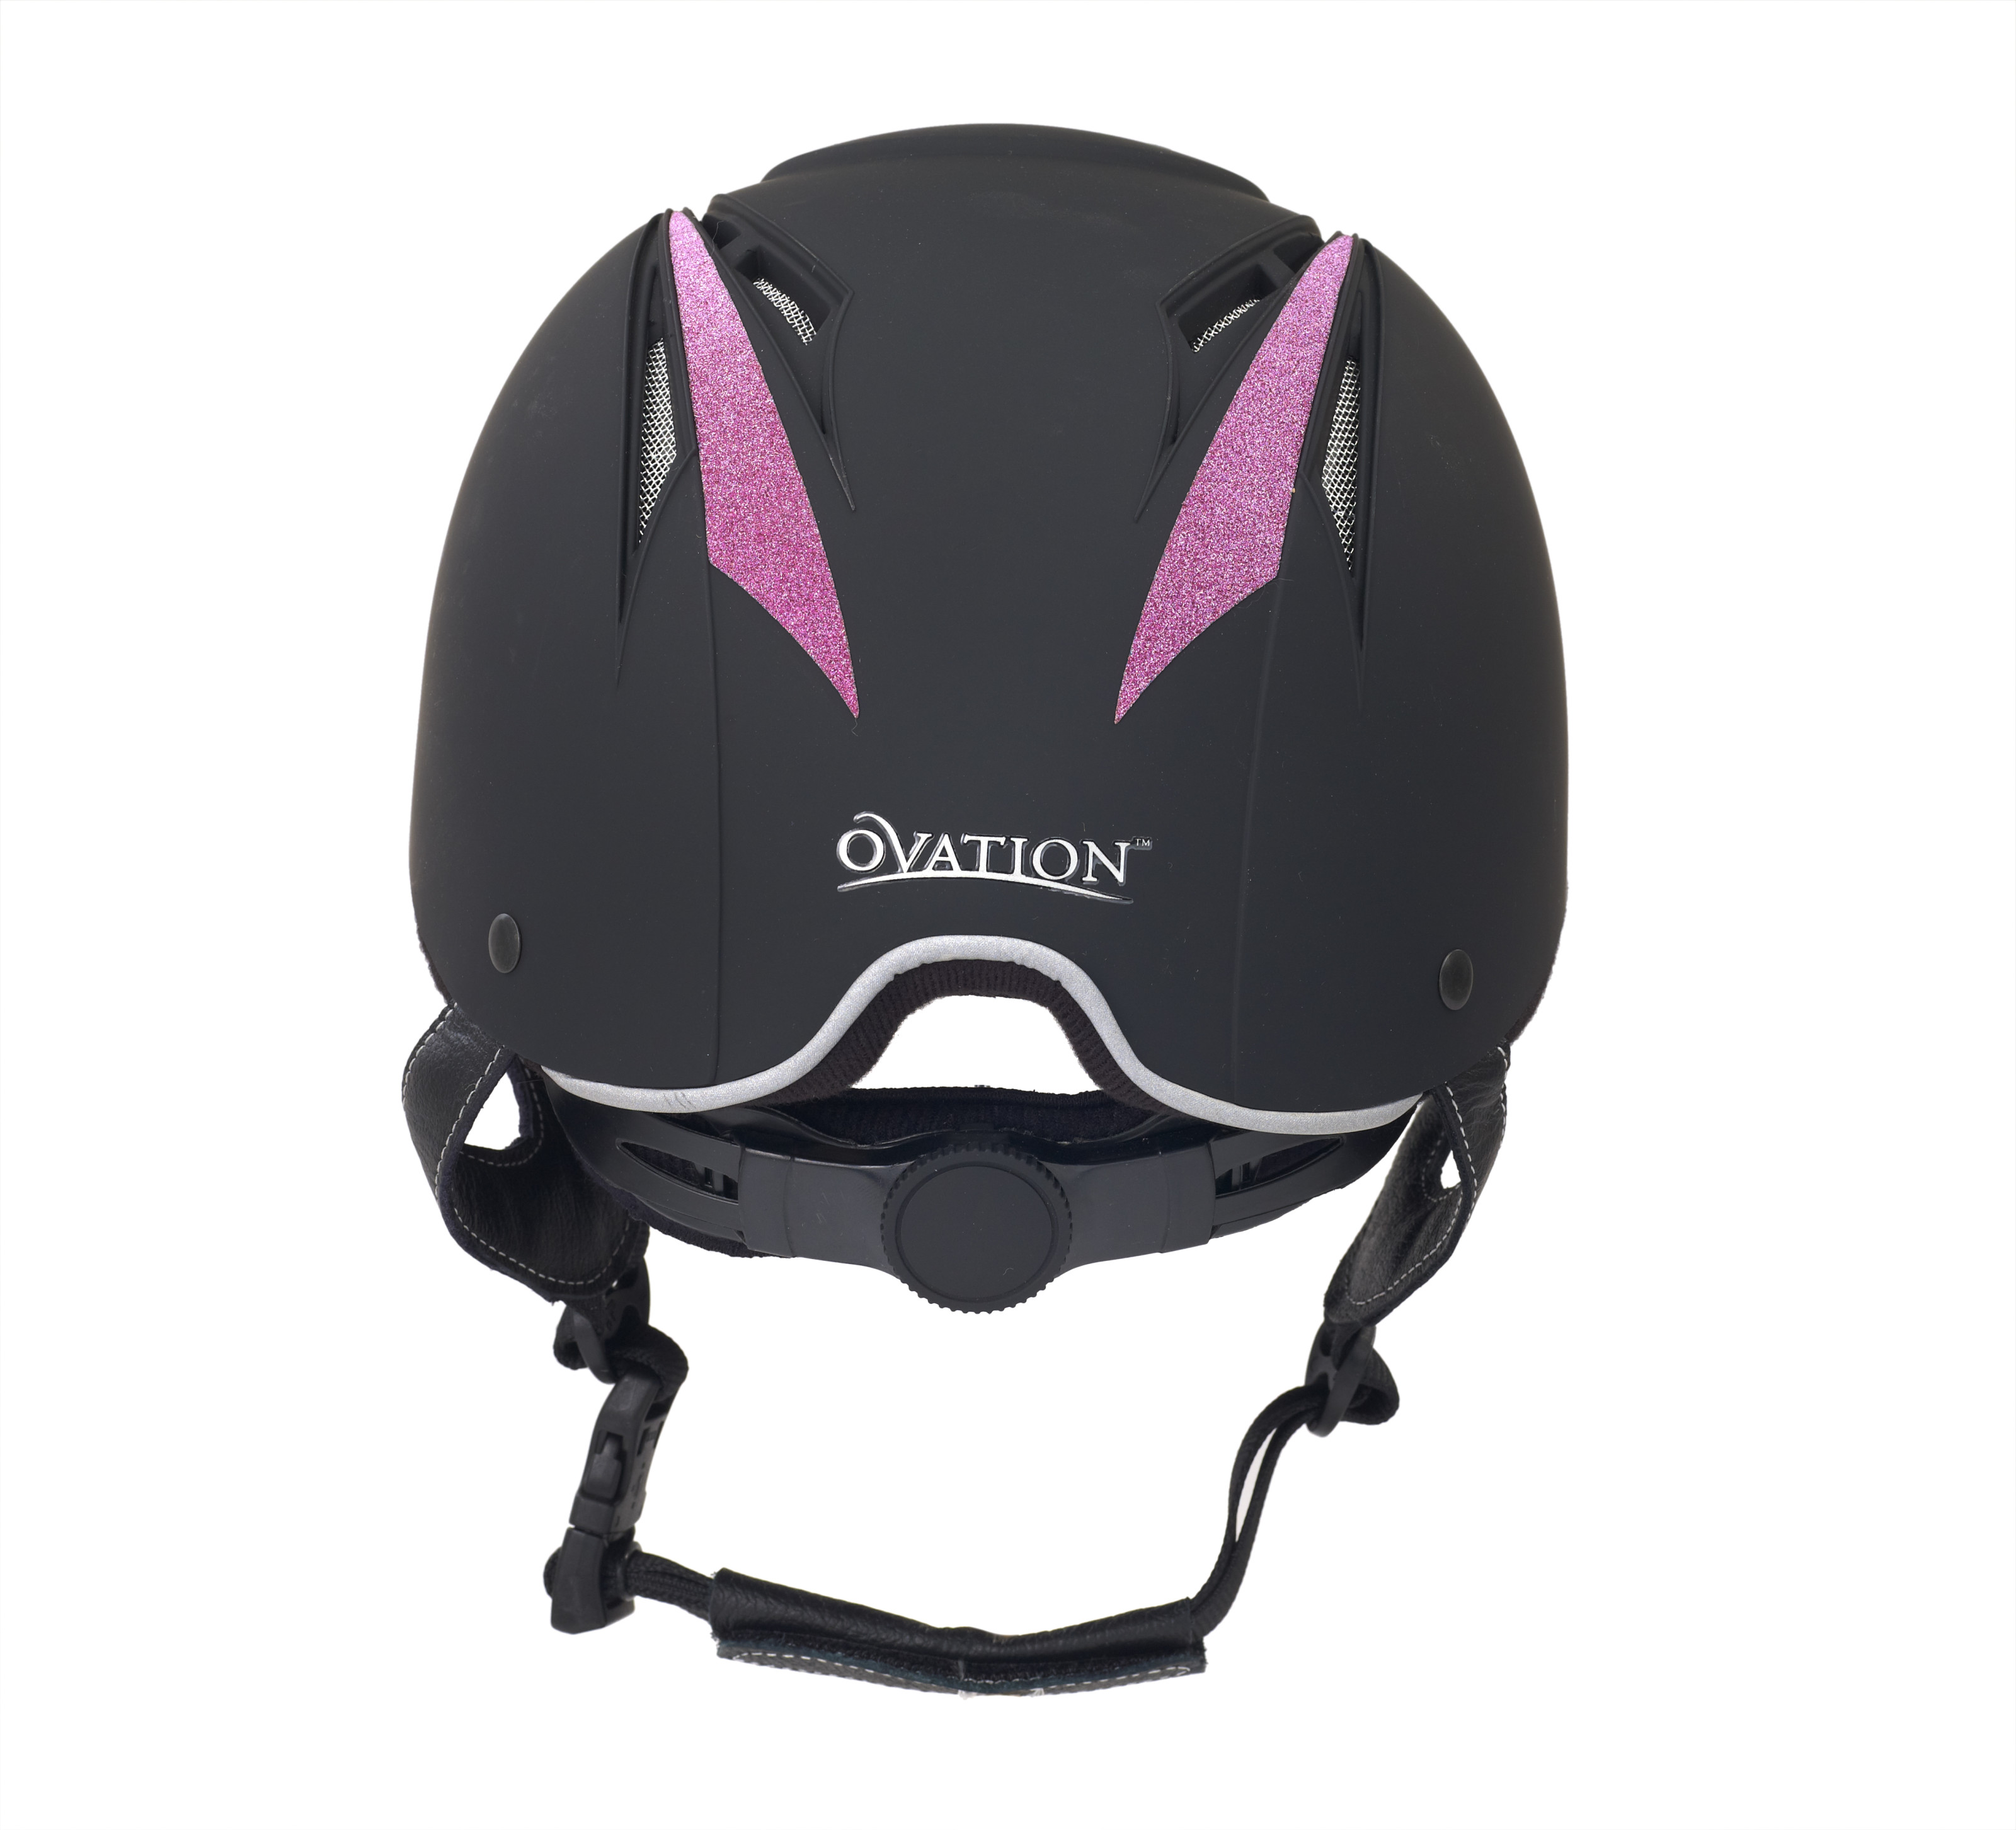 Ovation Z-6 Glitz Helmet - Black/Black/Pink -  Ovation-469358-Black/Black/Pink - Save up to 75% off Top Equestrian Brands  - Tack of the Day